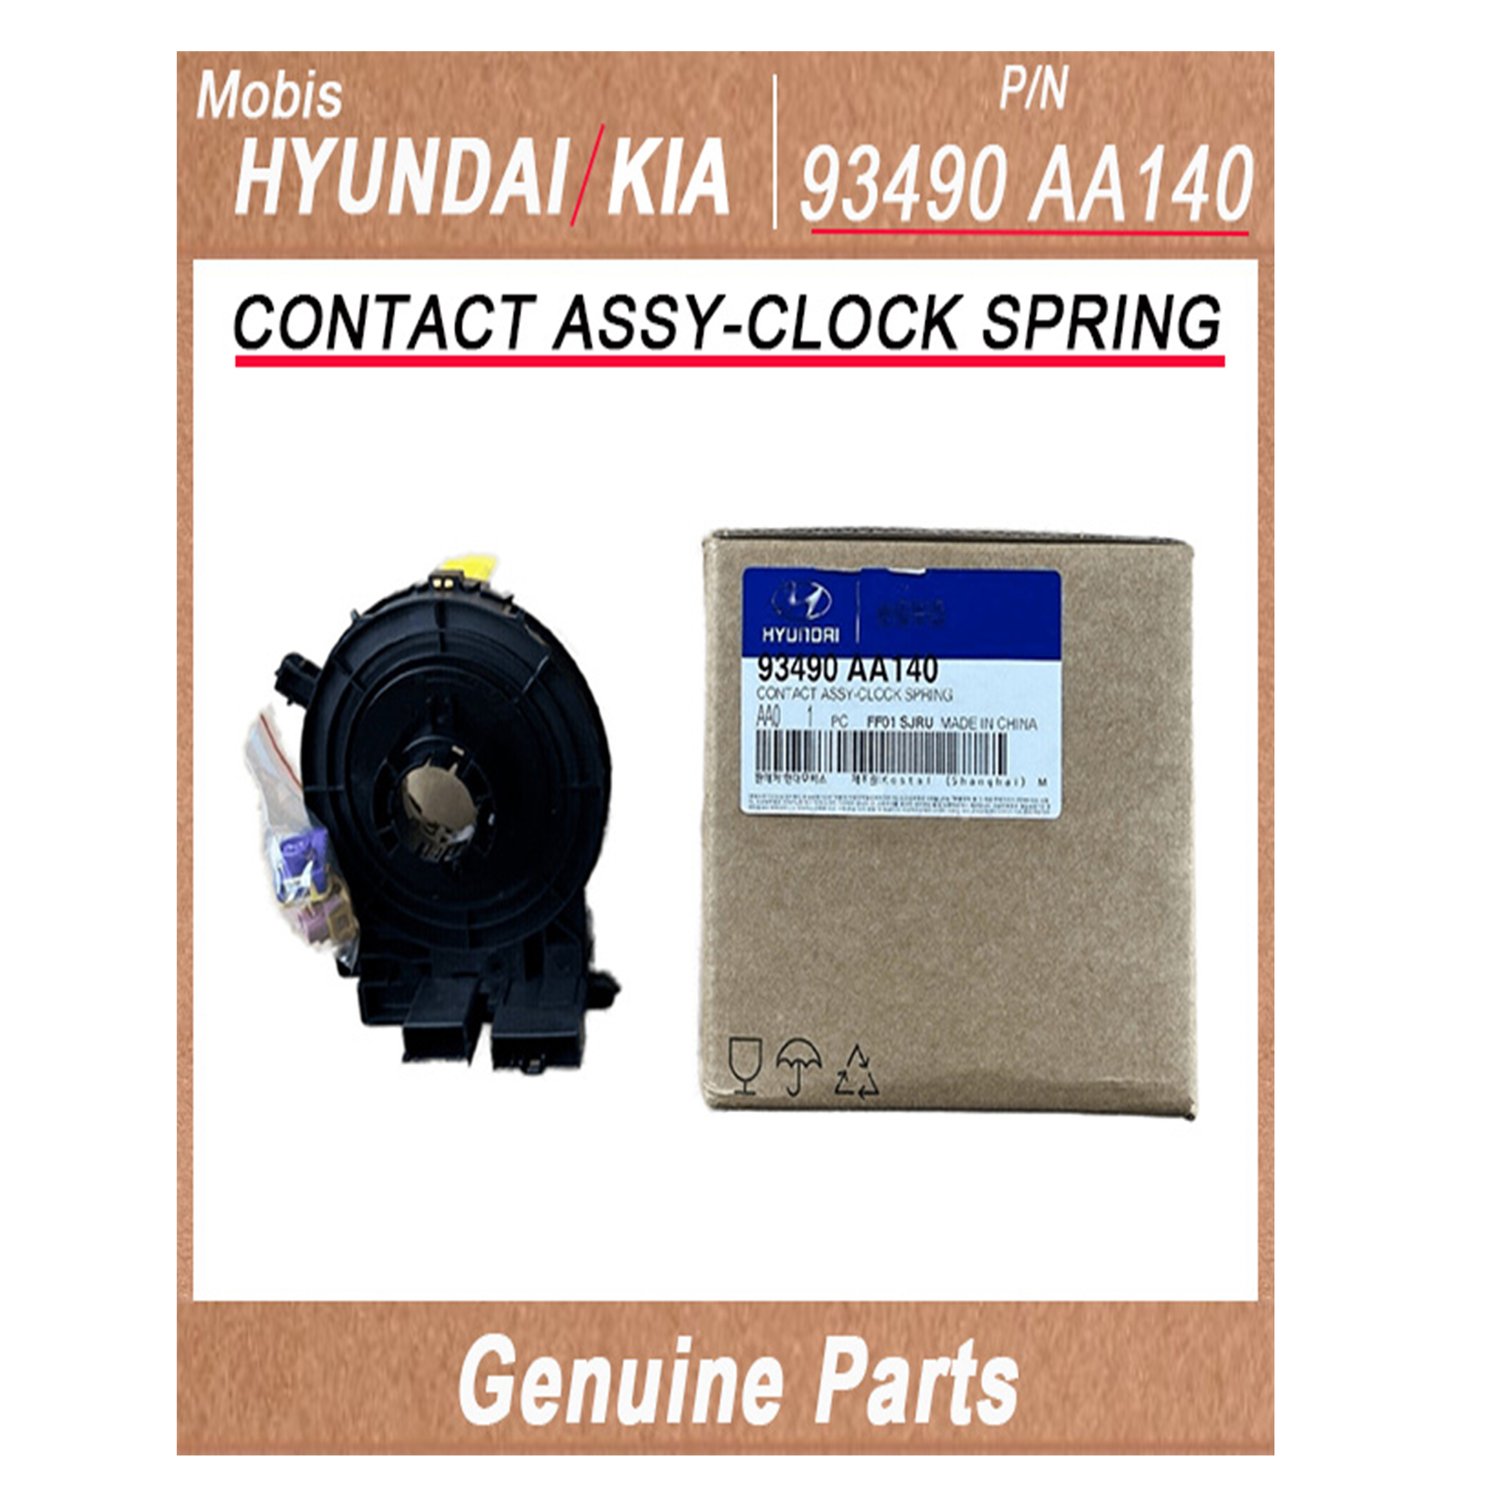 93490AA140 _ Genuine Korean Automotive Spare Parts _ Hyundai Kia _Mobis_